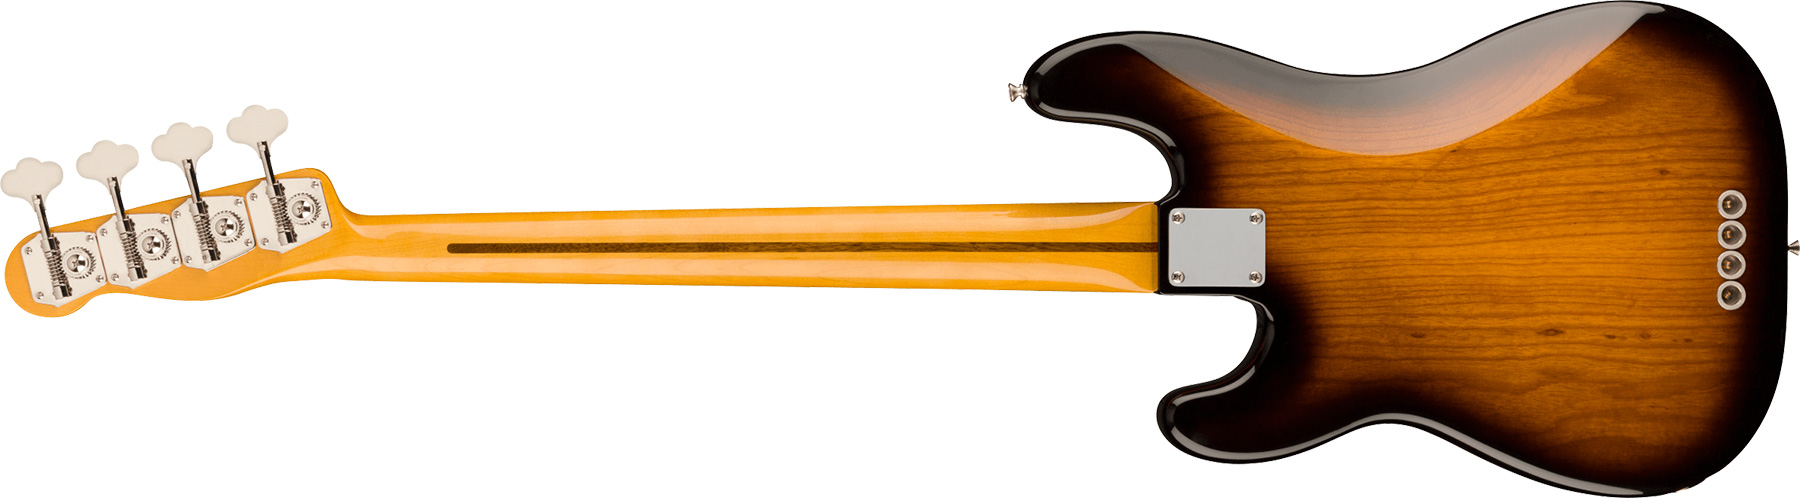 Fender Precision Bass 1954 American Vintage Ii Usa Mn - 2-color Sunburst - Basse Électrique Solid Body - Variation 1